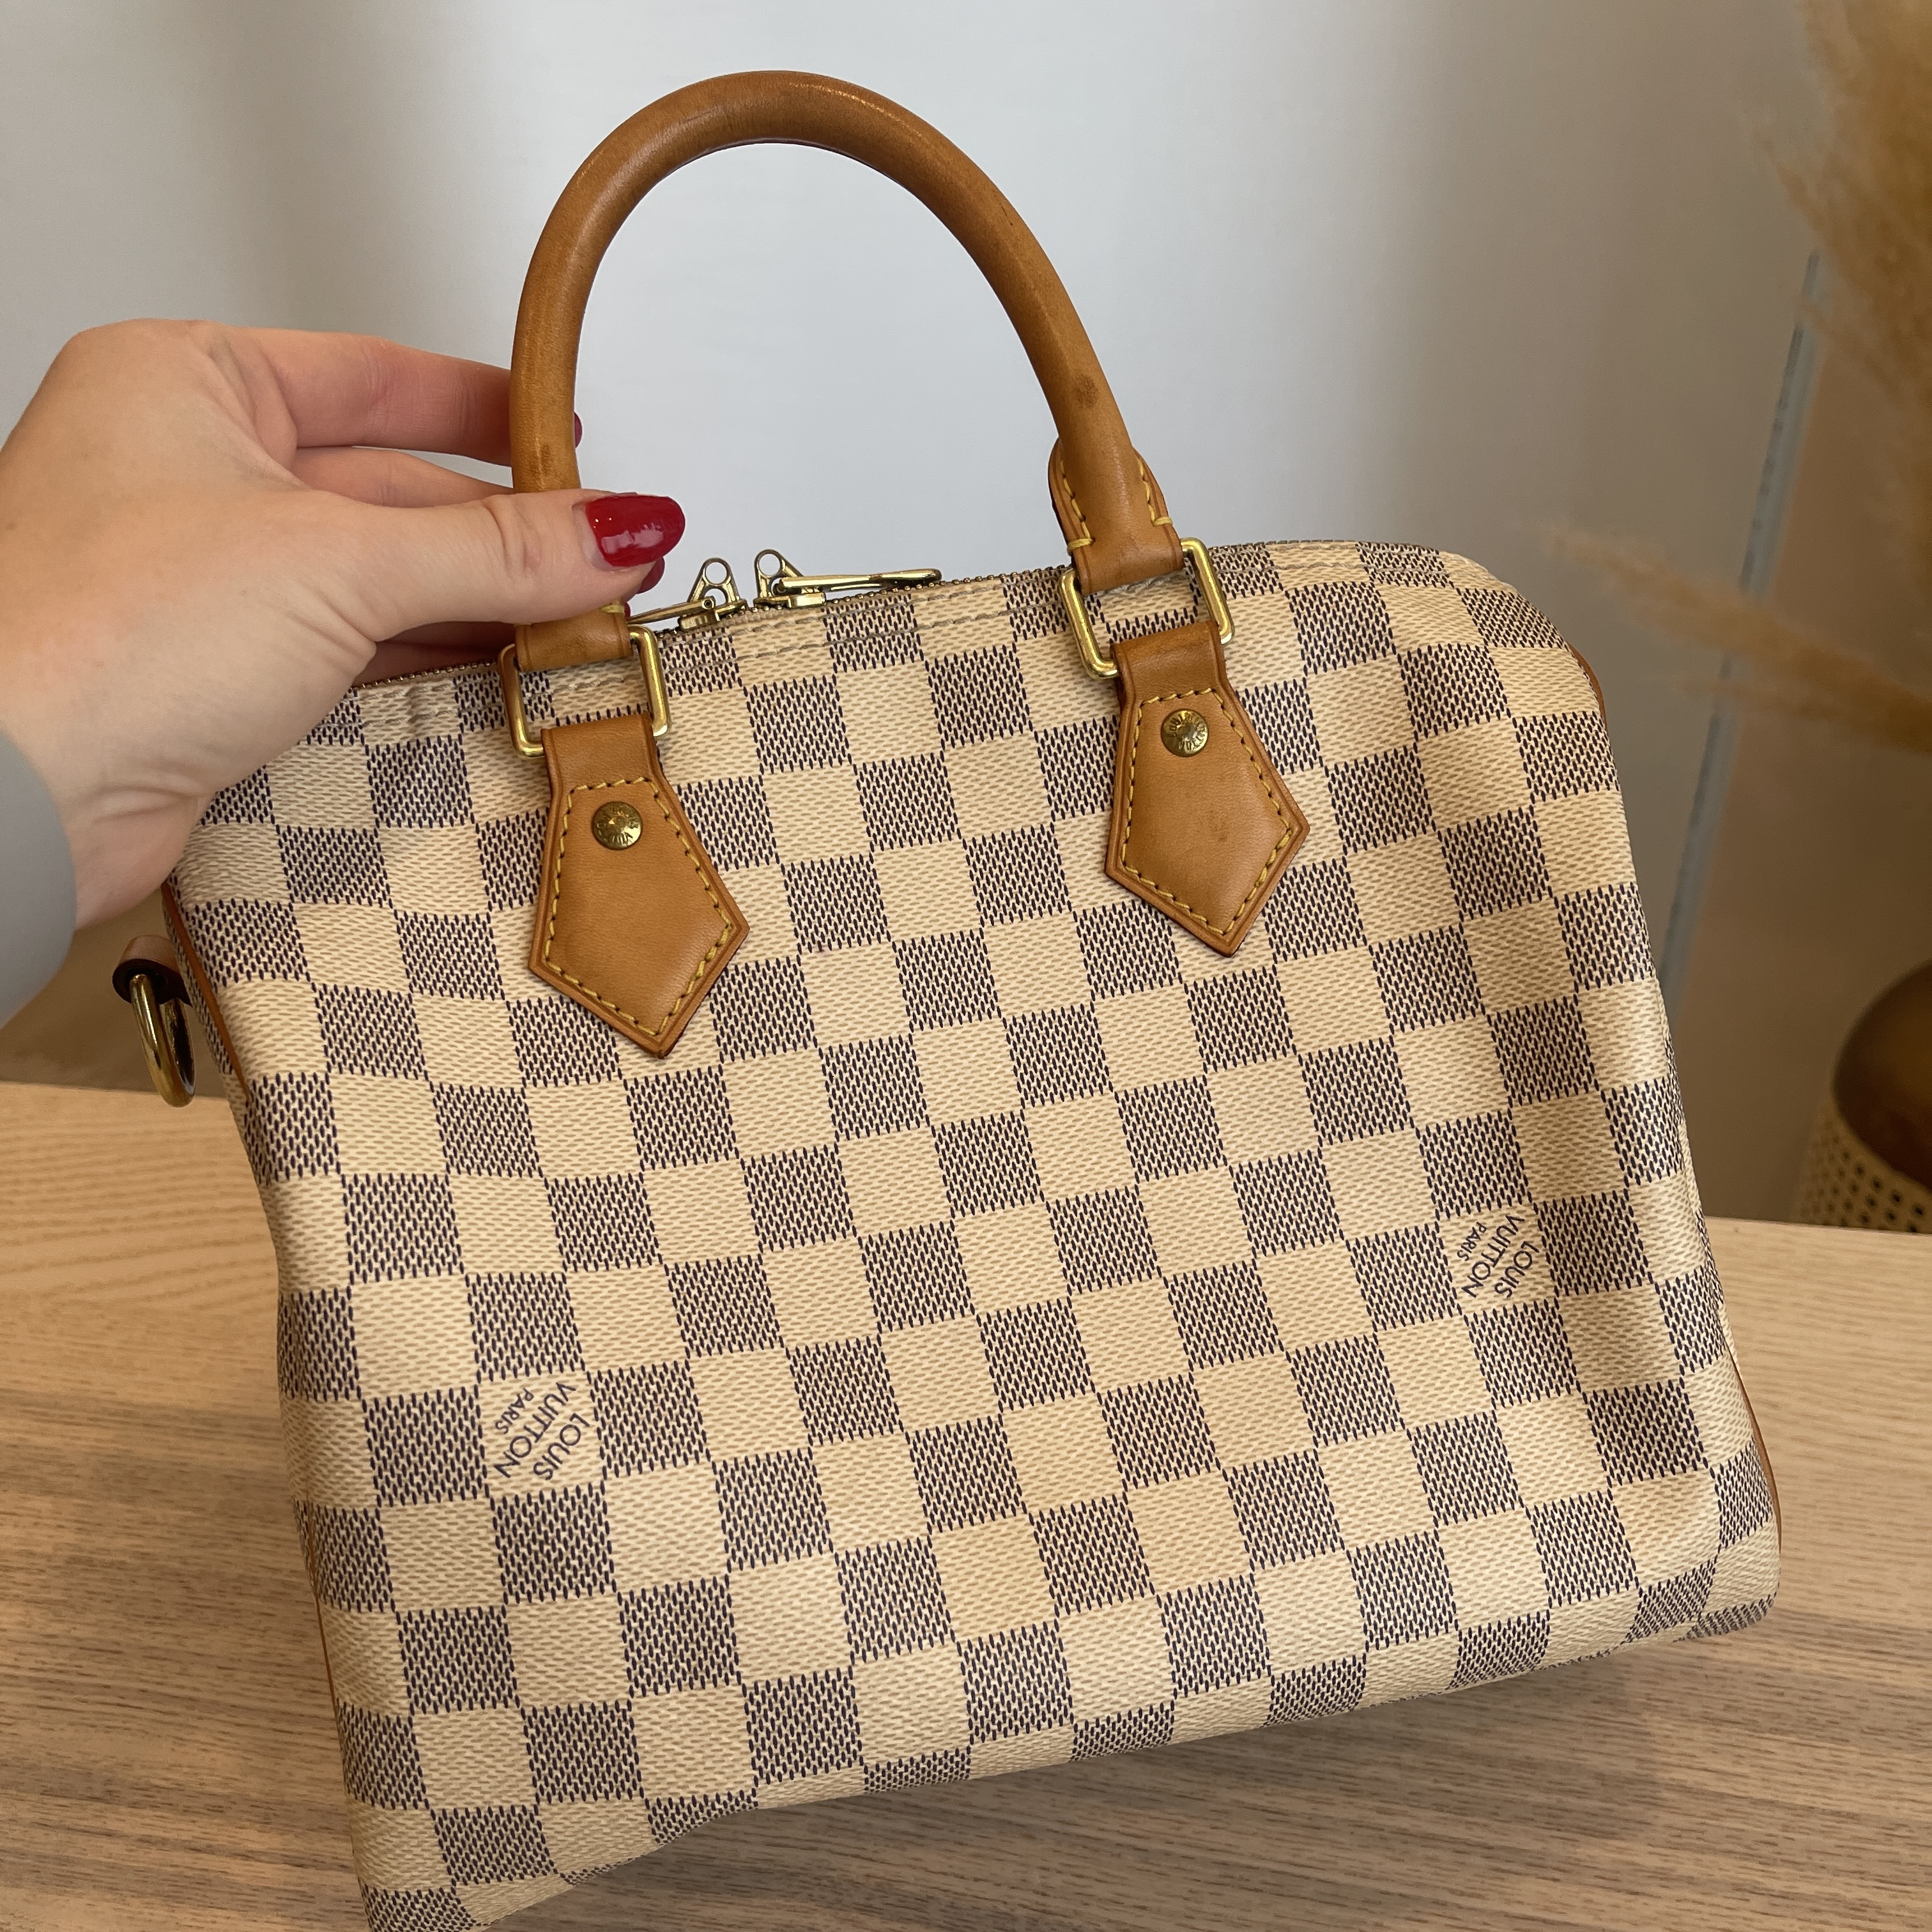 Louis Vuitton LV Hand Bag Speedy 25 White Damier Azur authentic 2019